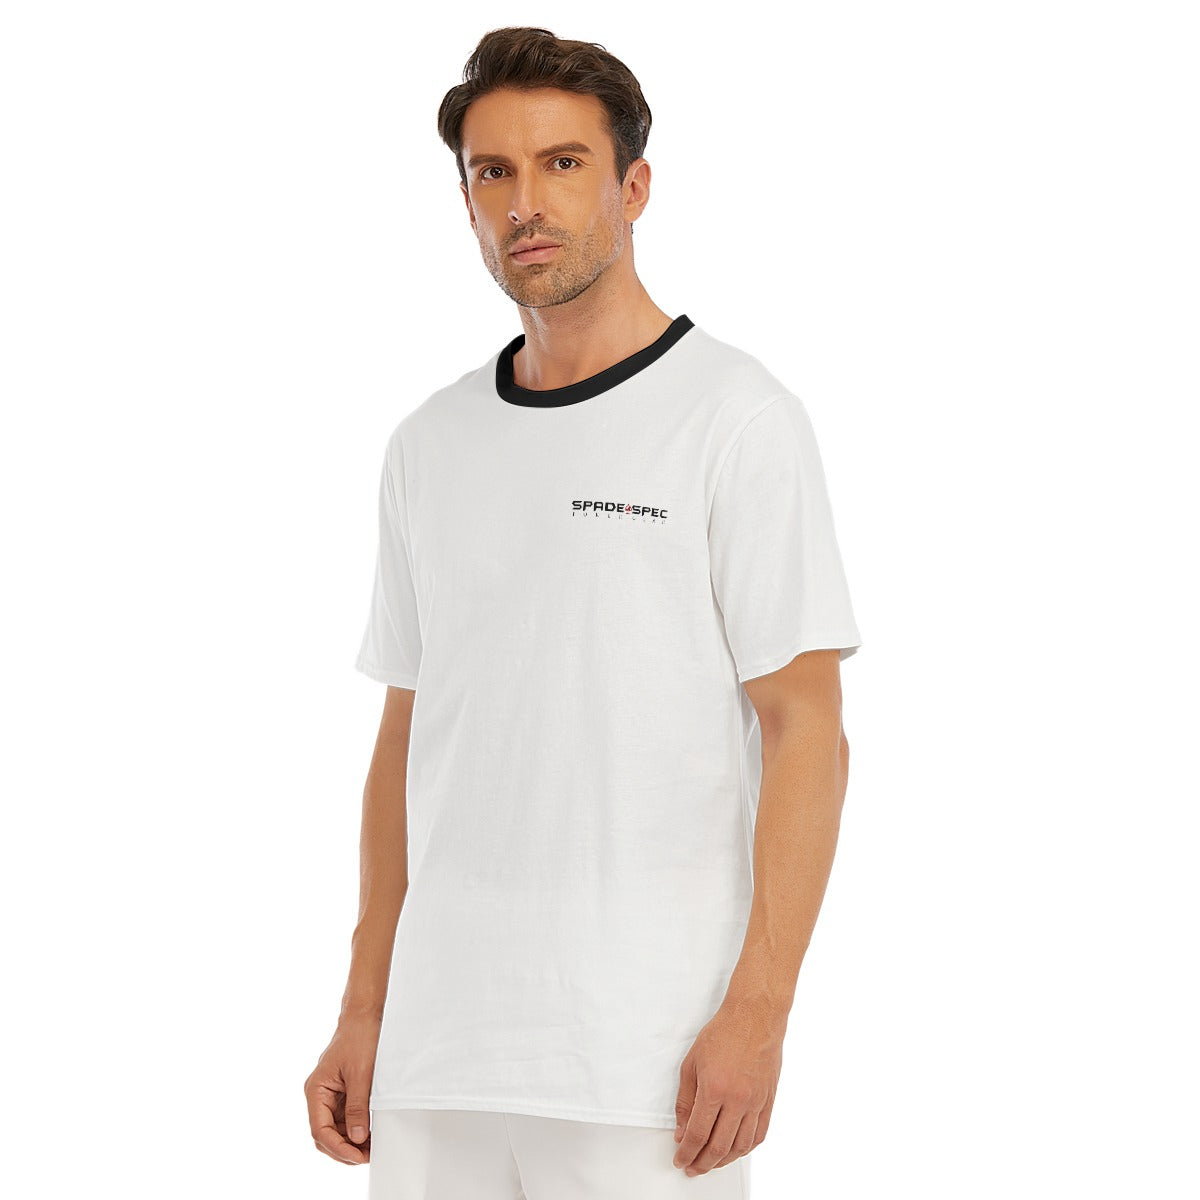 SSPG Long Logo Cotton T-Shirt WHT